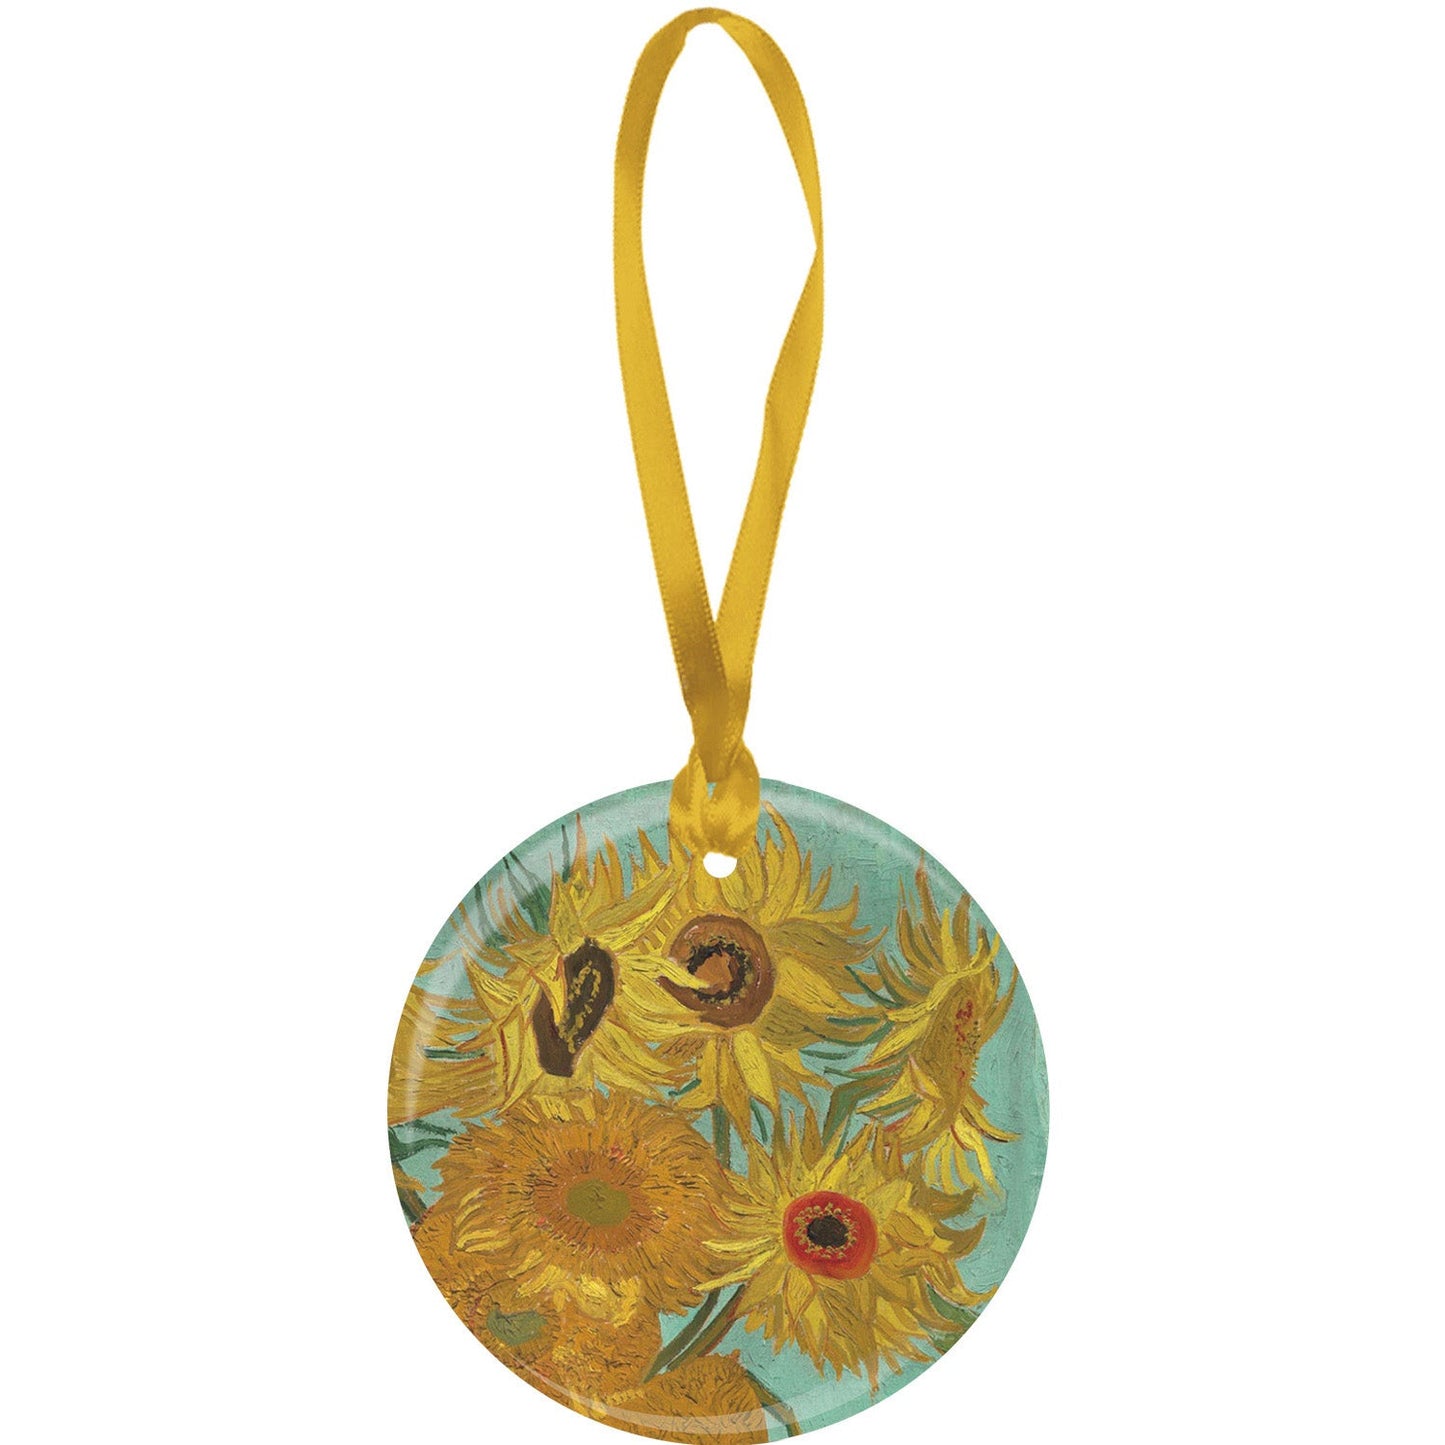 Adorno de porcelana "Girasoles" de Van Gogh